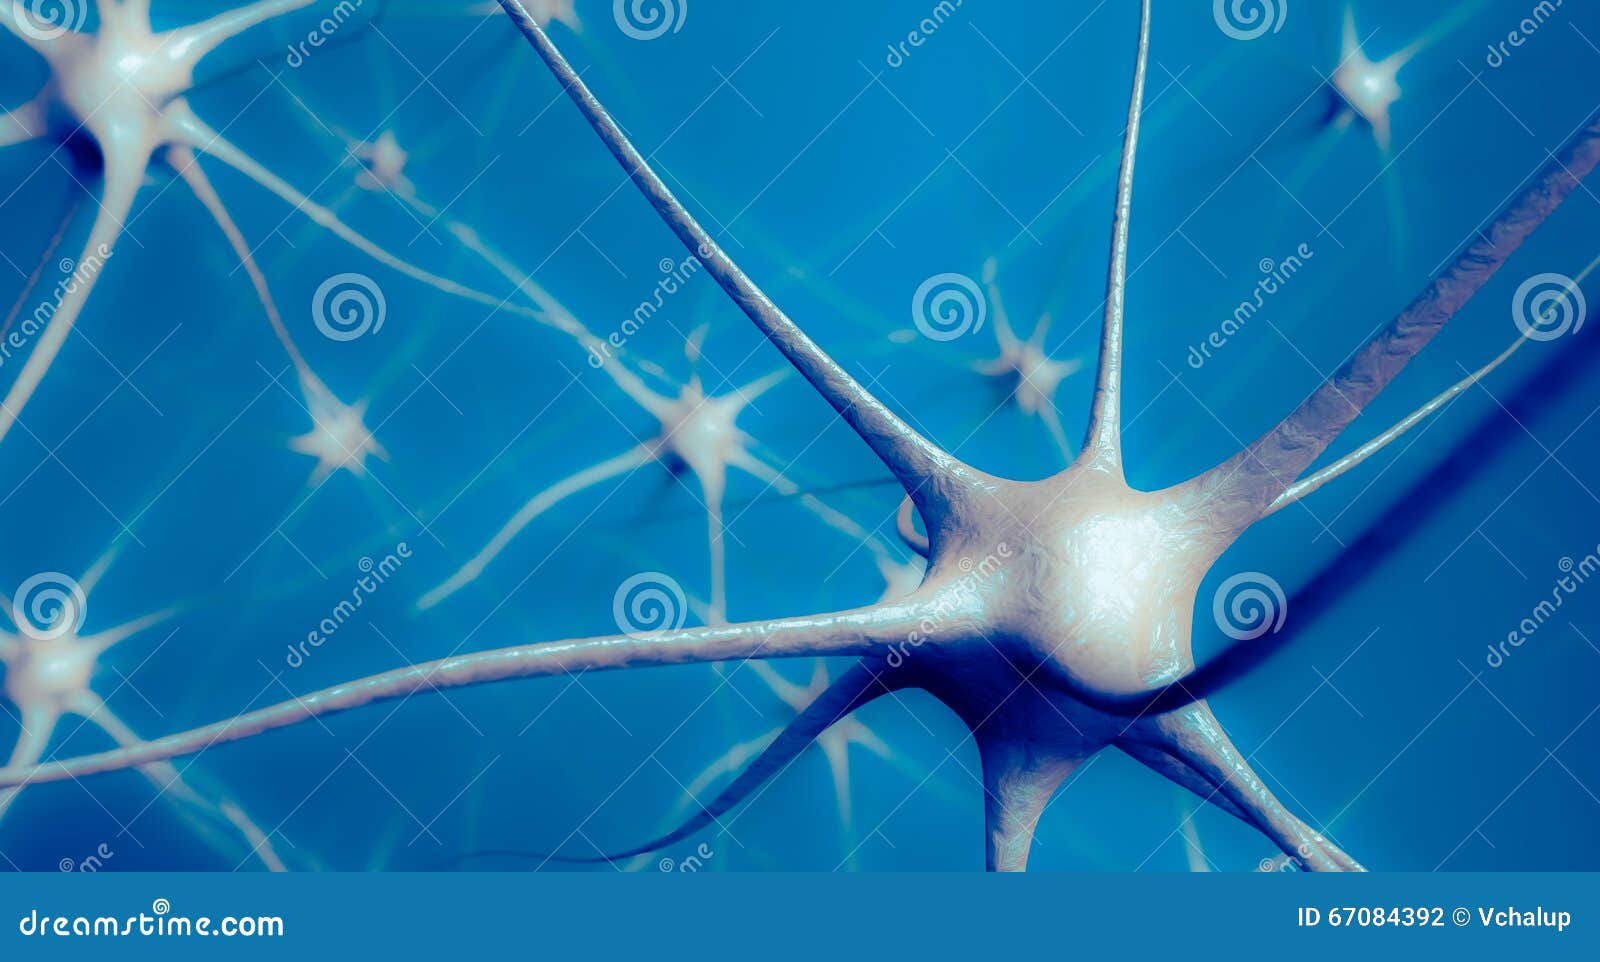 neurons in brain, 3d  of neural network